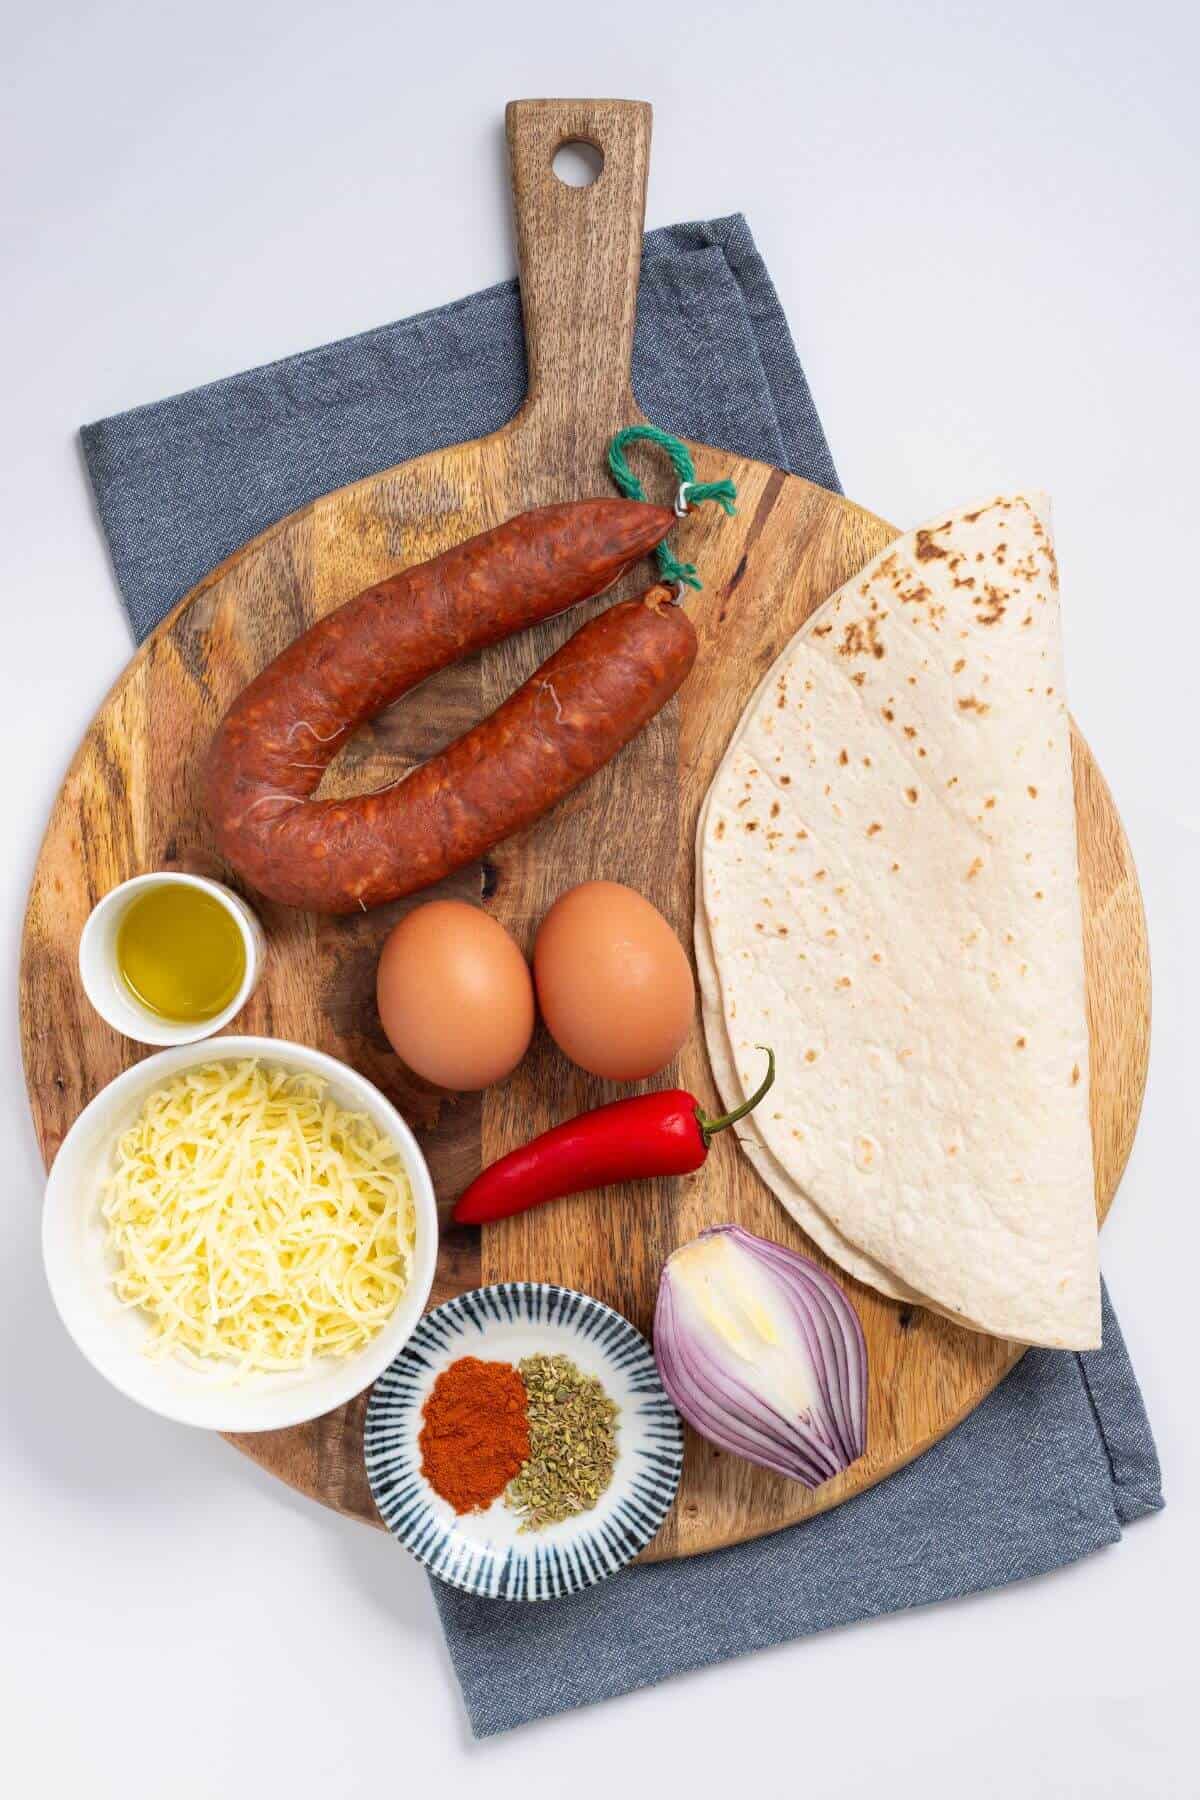 Ingredients used for breakfast chorizo burrito.